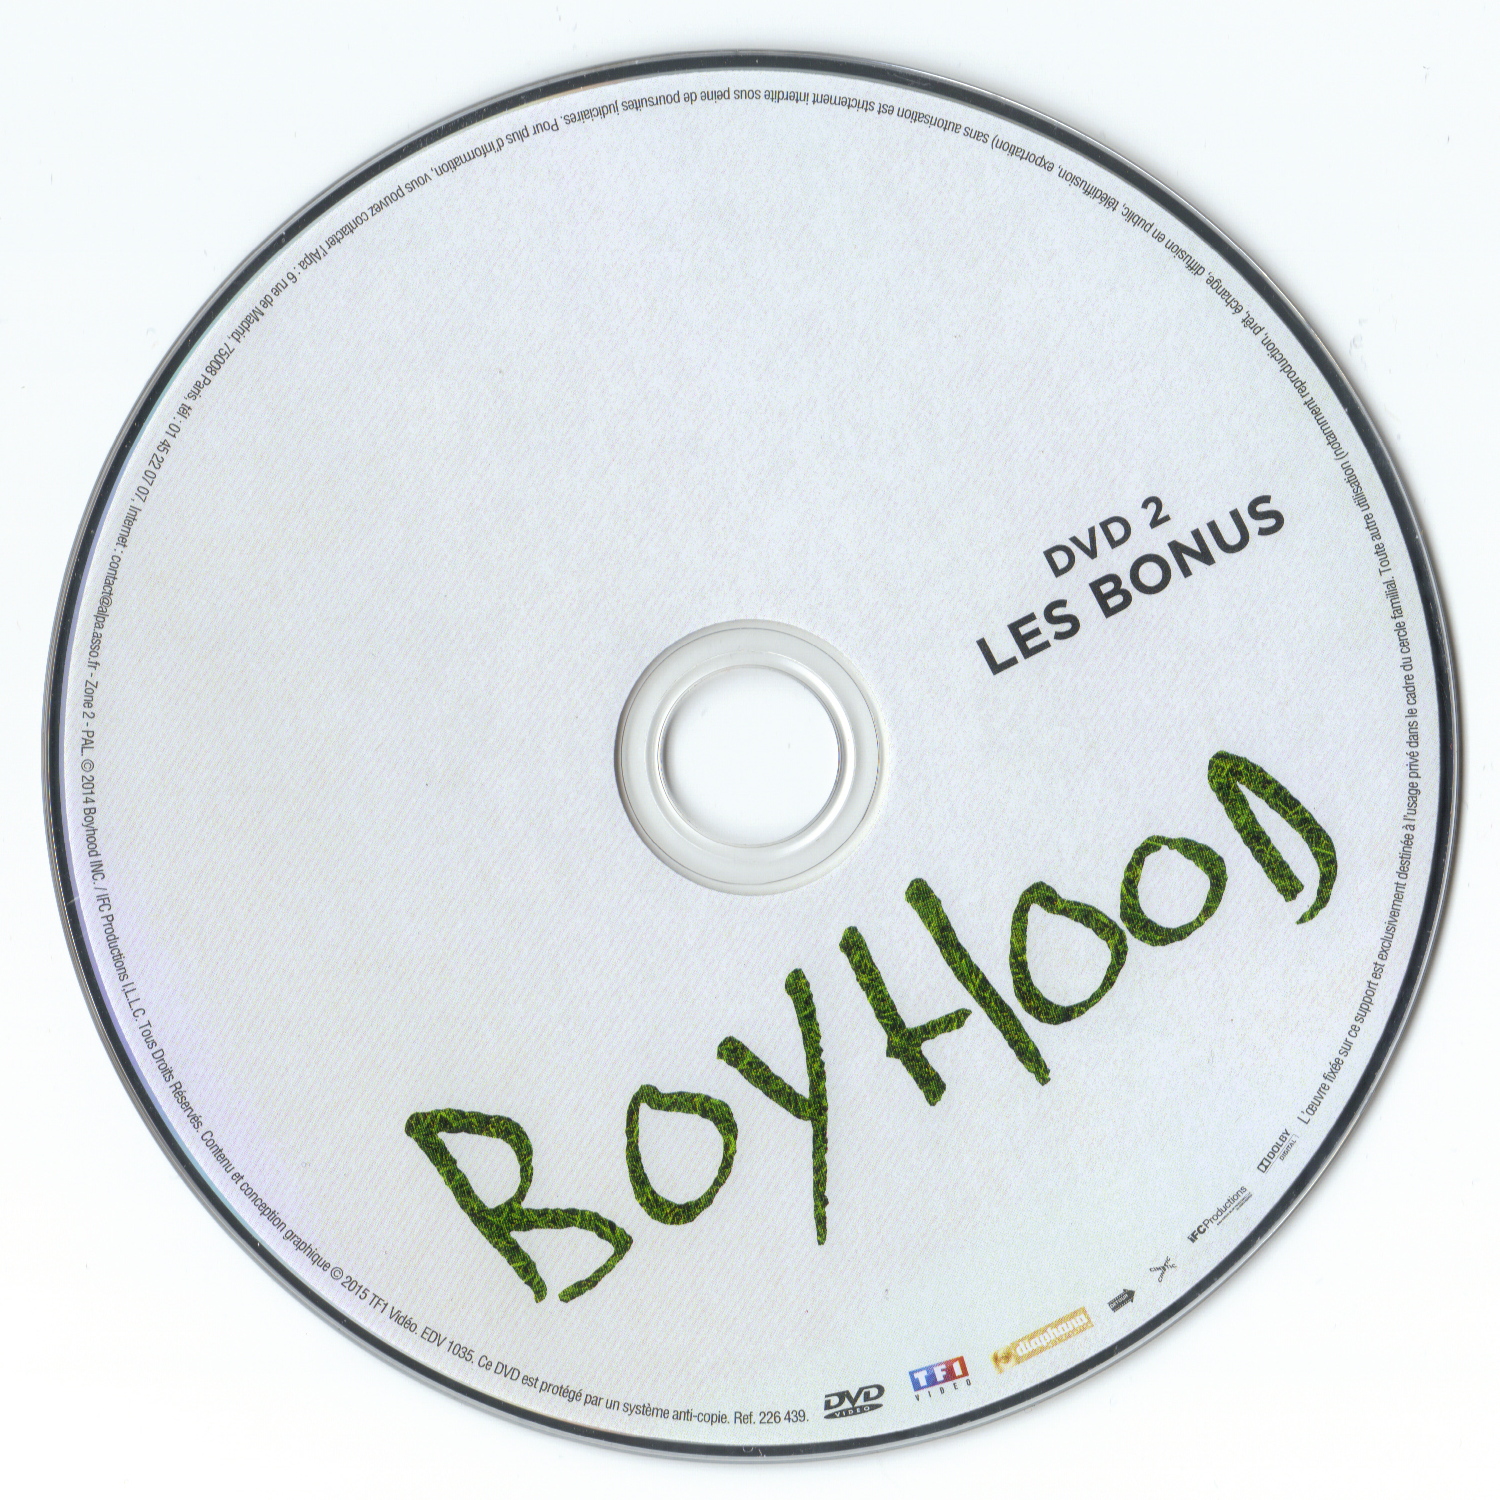 Boyhood DISC 2